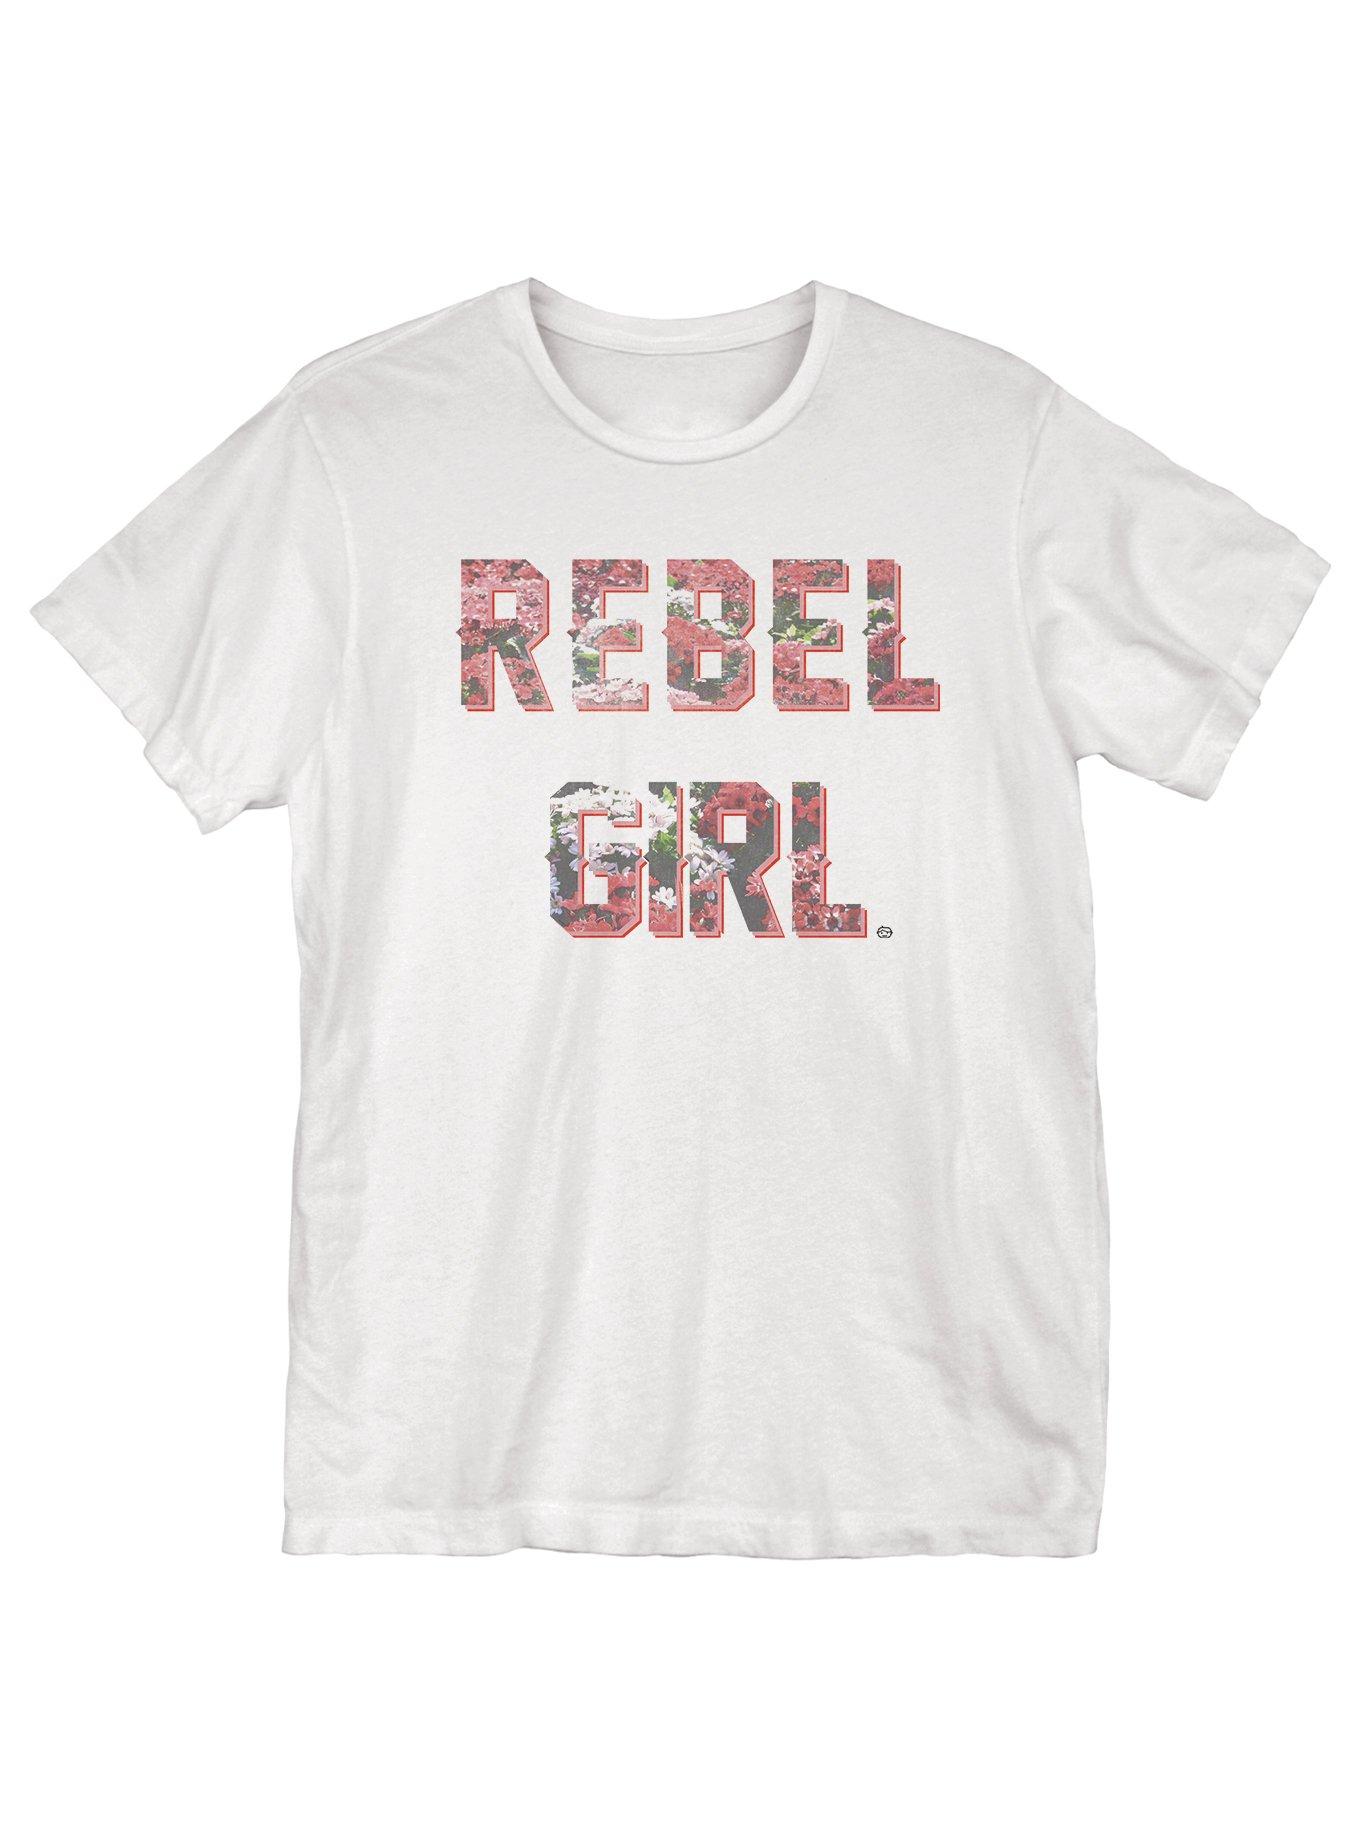 Rebel Girl T-Shirt, WHITE, hi-res